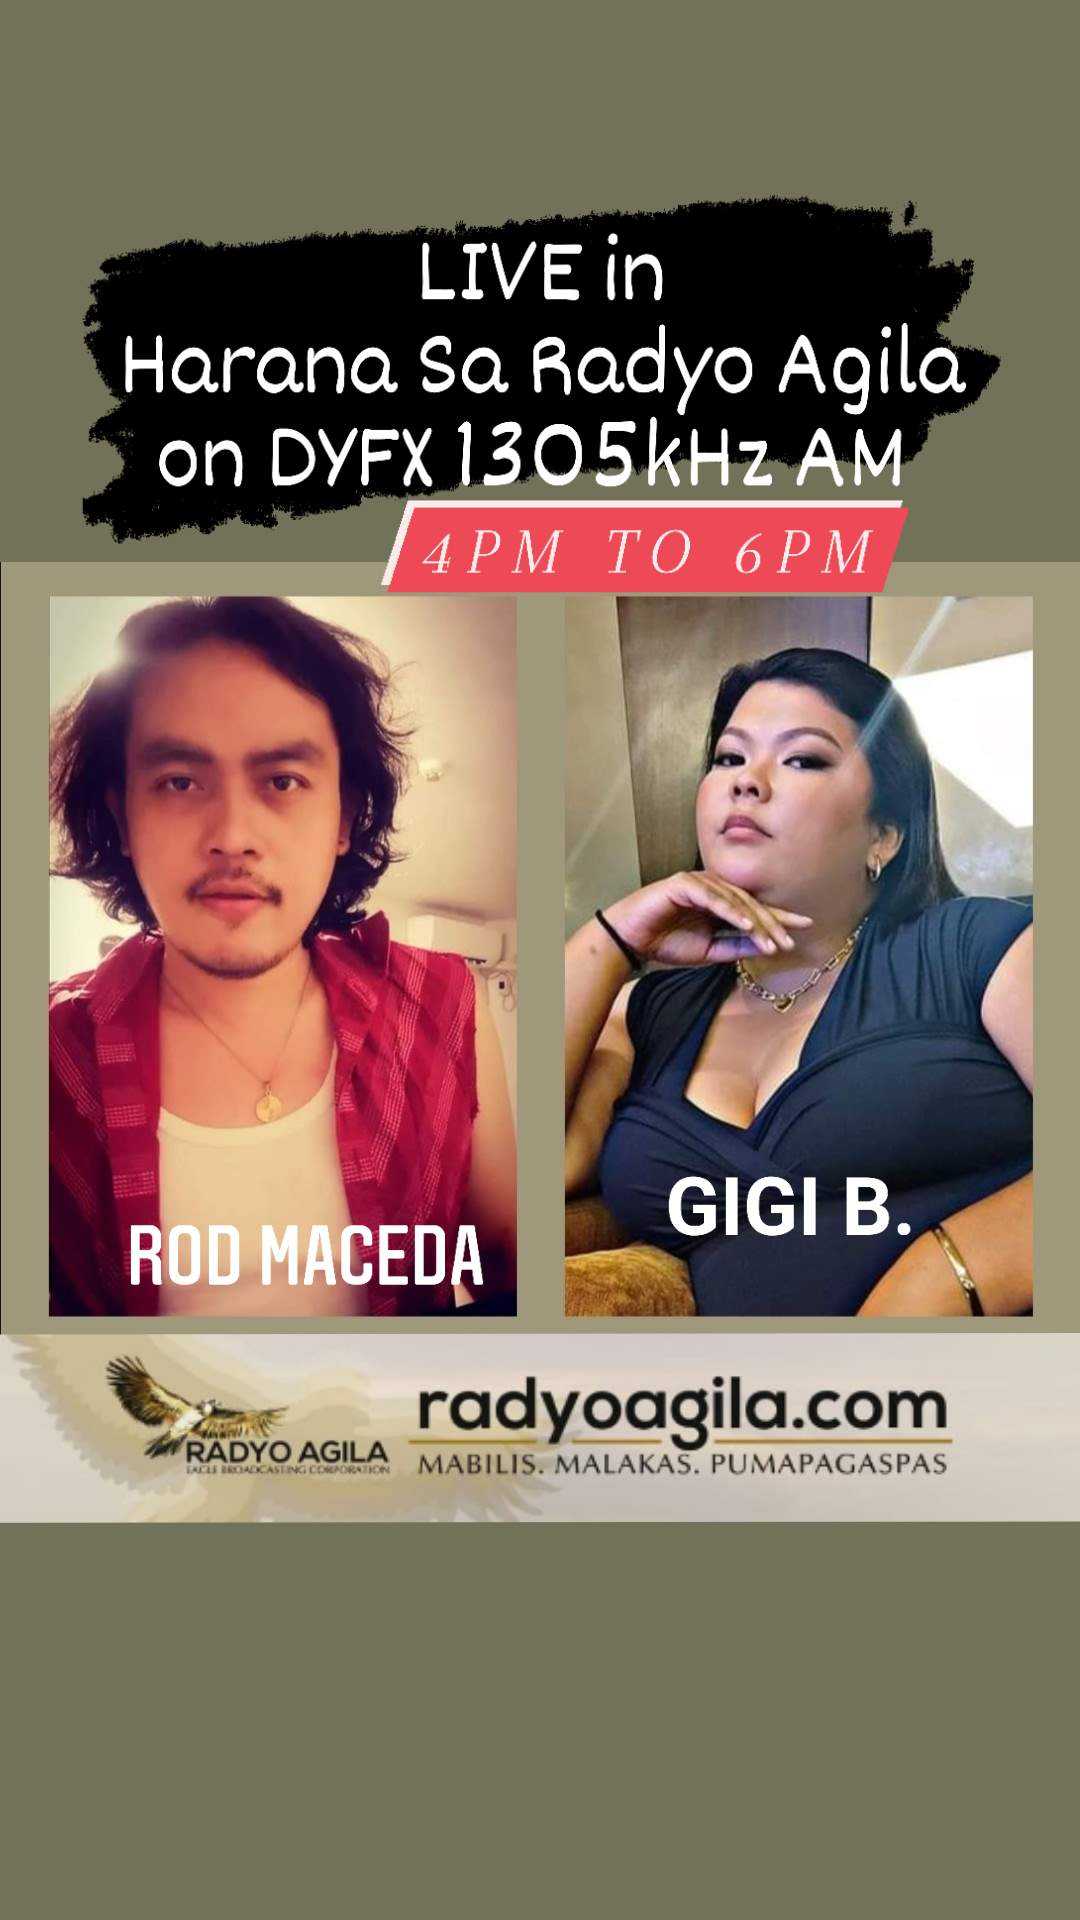 Rod Maceda Gigi B Live in Harana Sa Radyo Agila on DYFX 1305kHz AM.jpg